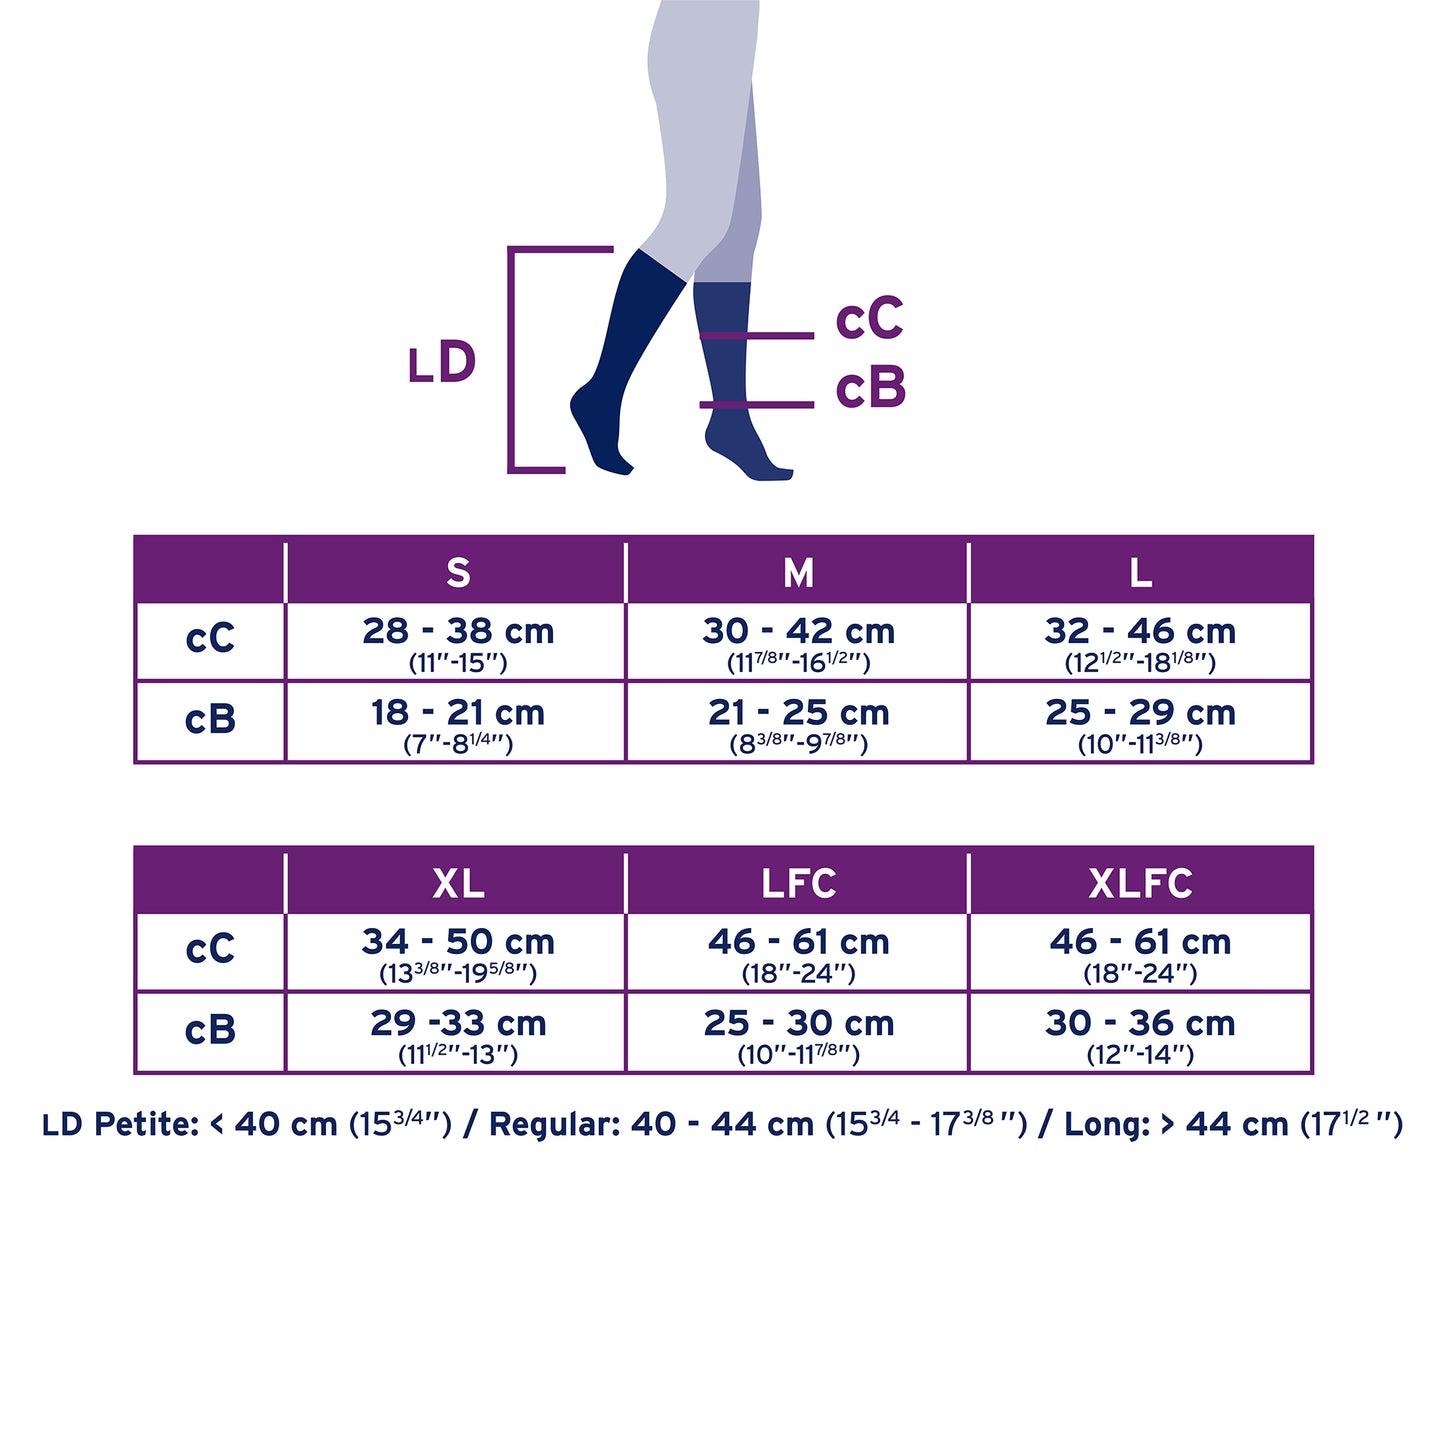 JOBST Casual Pattern Compression Socks 20-30 mmHg Knee High Closed Toe